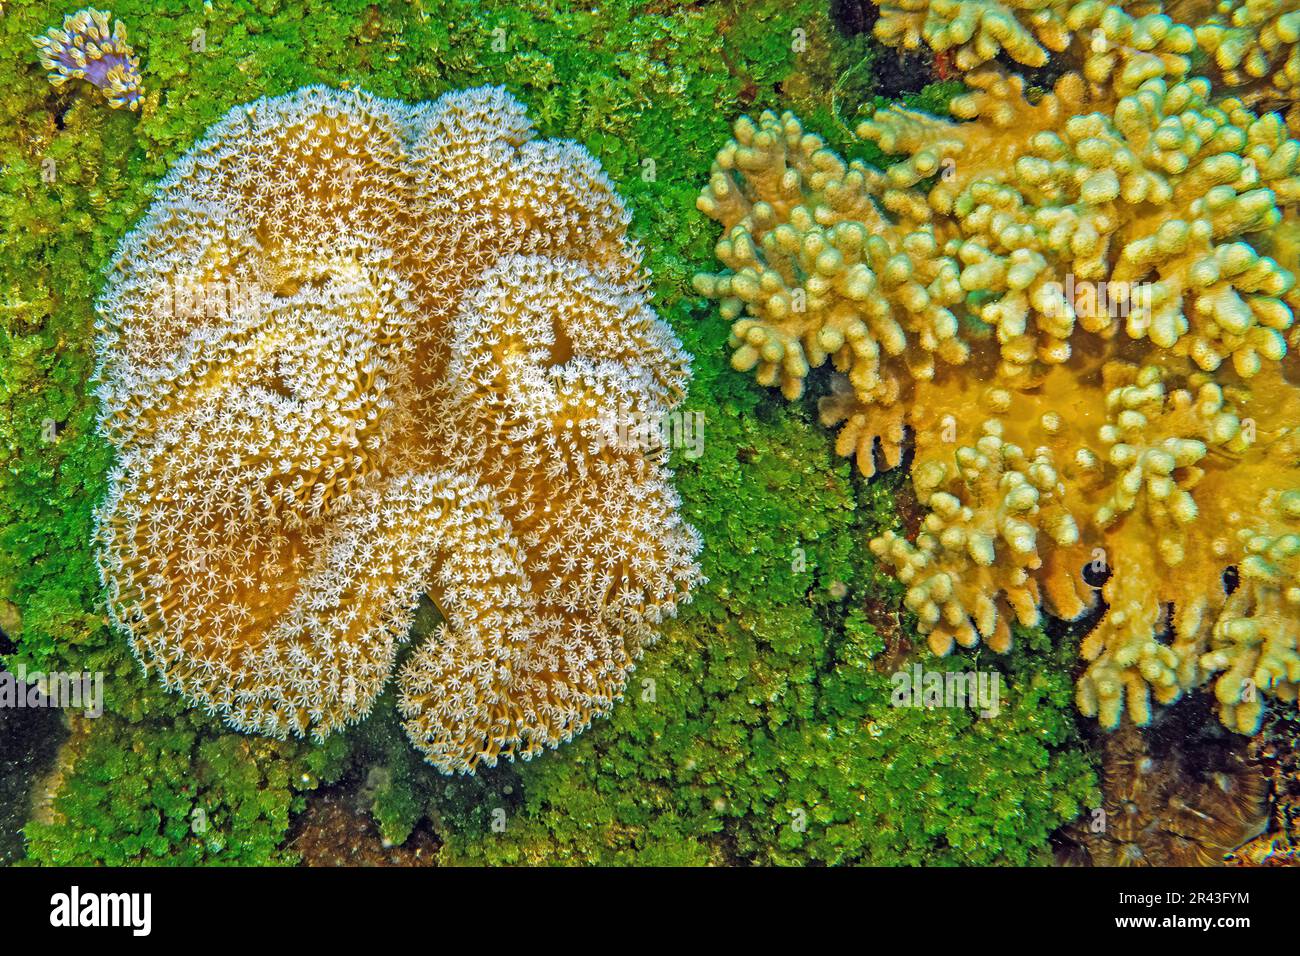 Left Leather coral (Sarcophyton glaucum), below Halimeda alga (Halimeda copiosa), right small polyp stony coral (Acropora) Hard coral, Indian Ocean Stock Photo